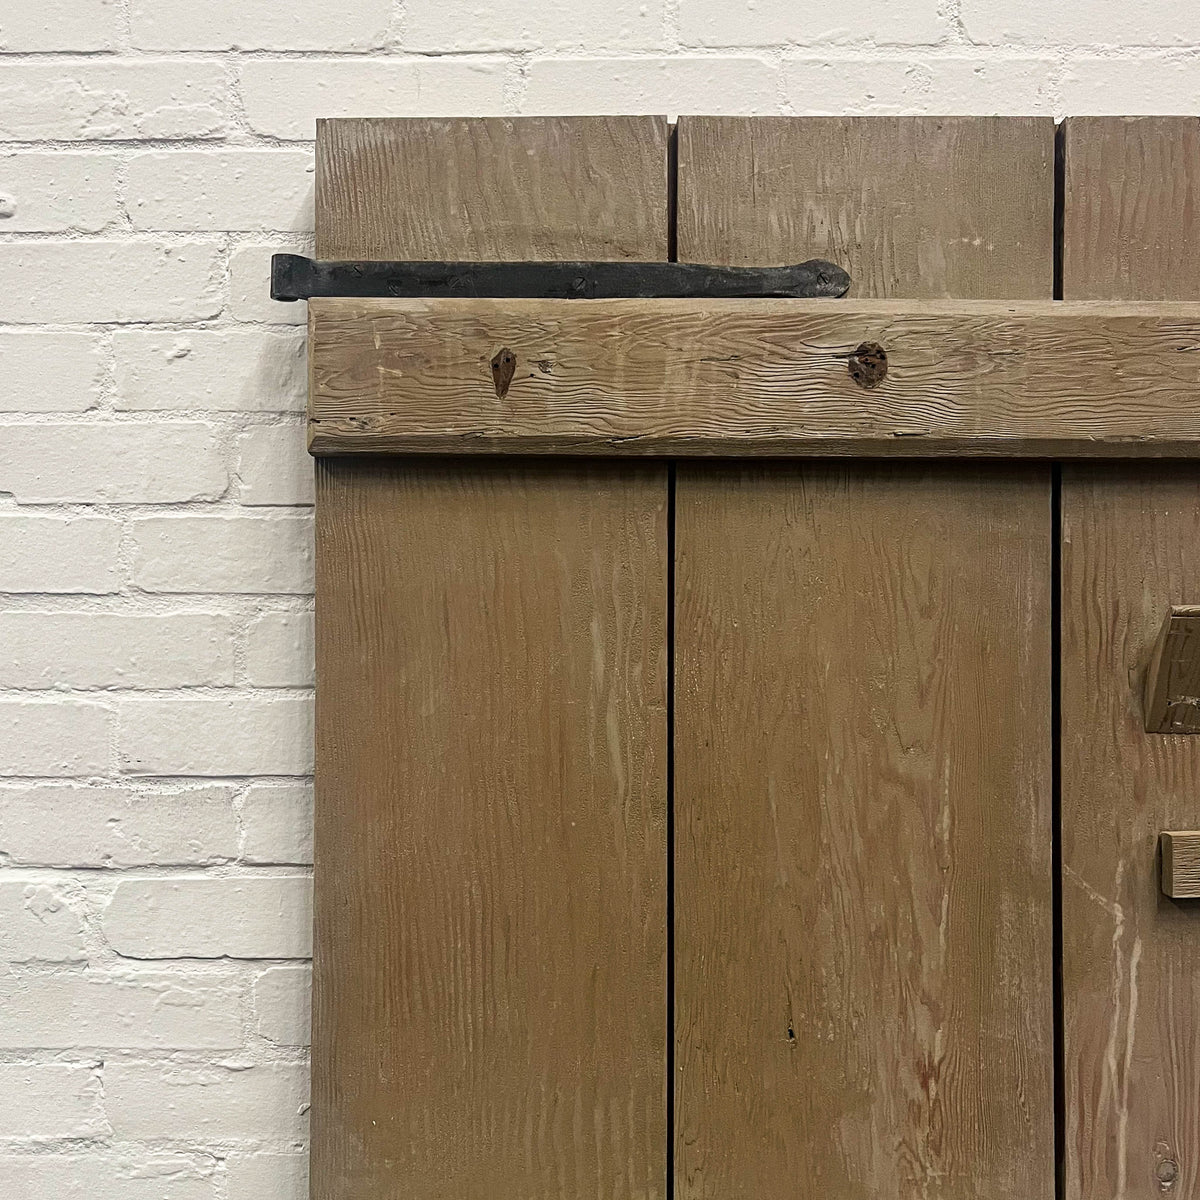 Antique Victorian Pine Latch Door - 187.5cm x 86cm | The Architectural Forum